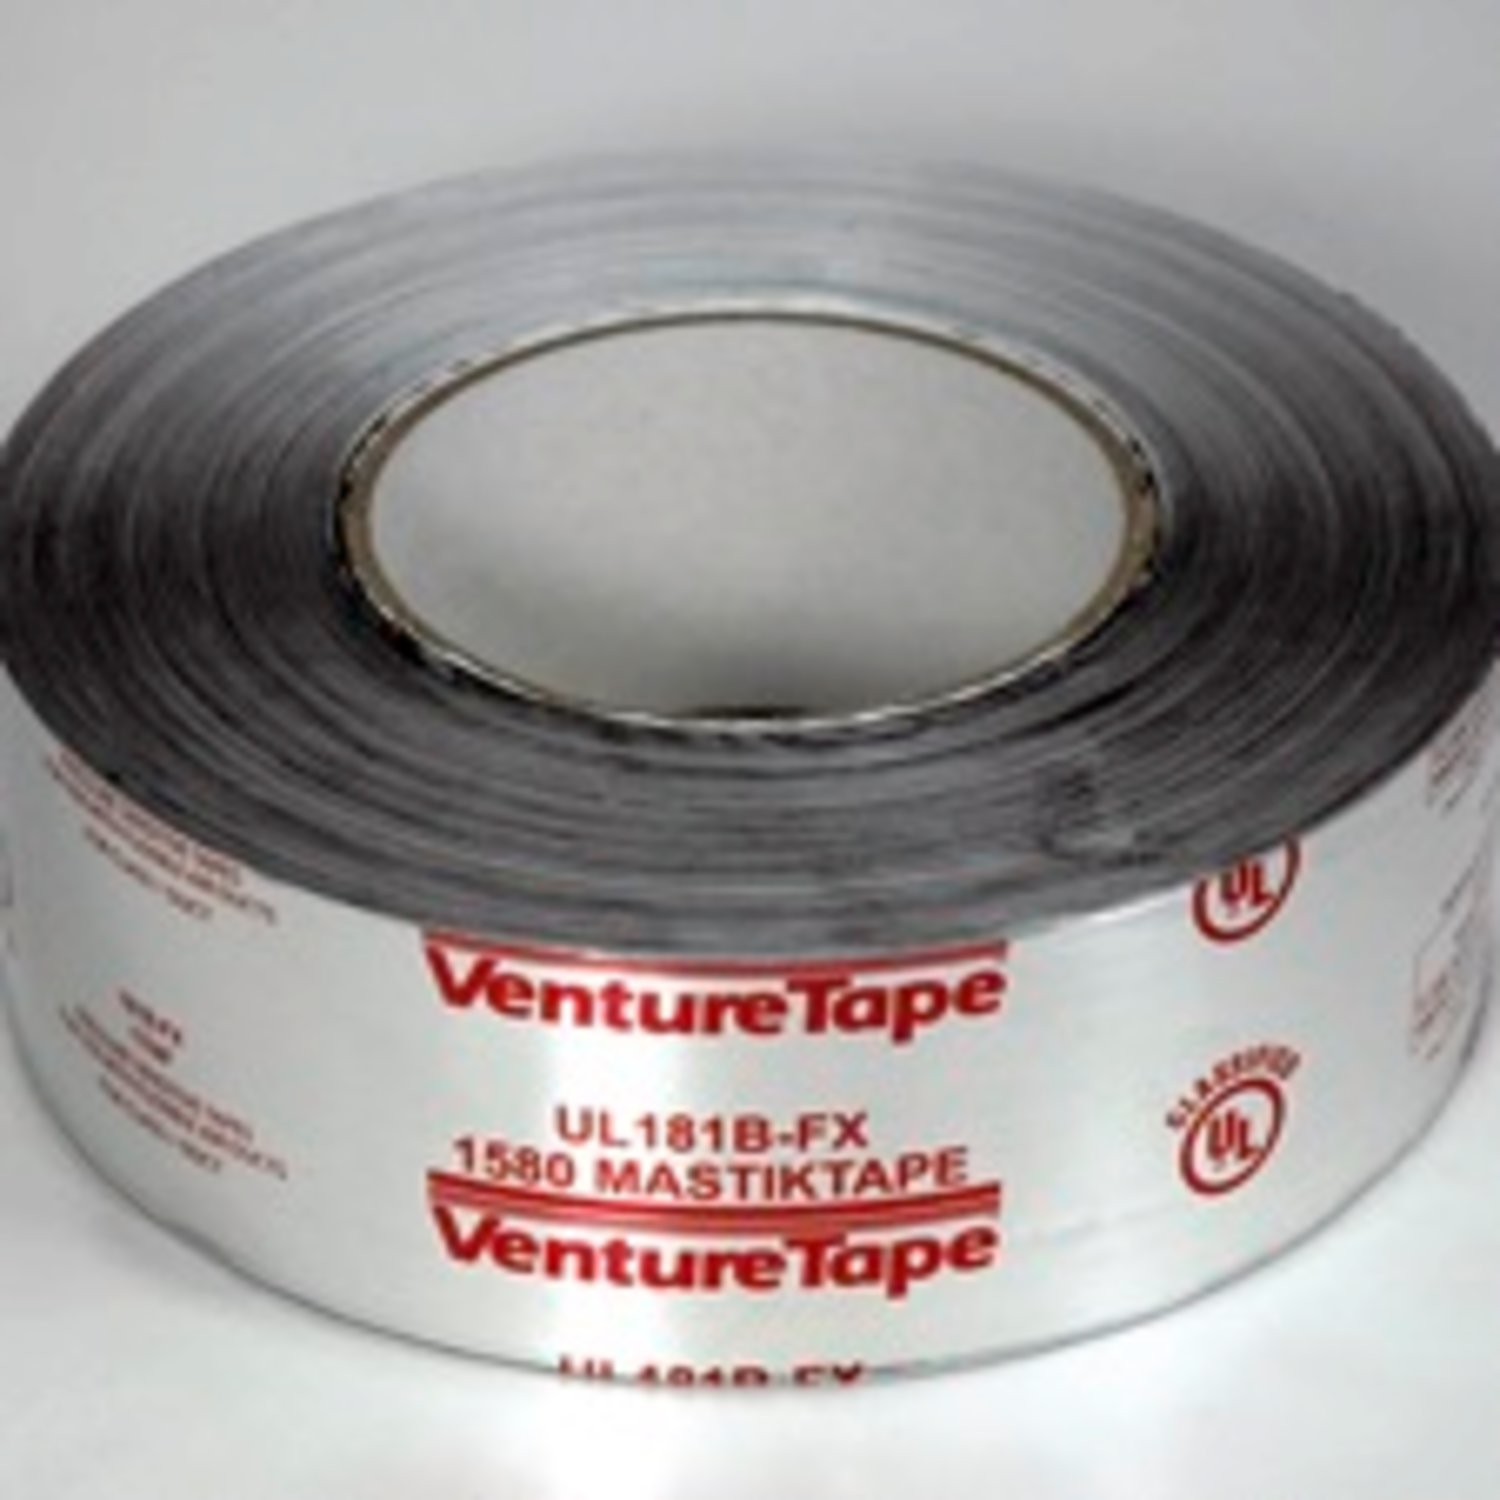 7010337393 - "3M Venture Tape UL181B-FX Mastik Foil Tape 1580-P, Silver, 2 in x
100
ft, 24 Rolls/Case"